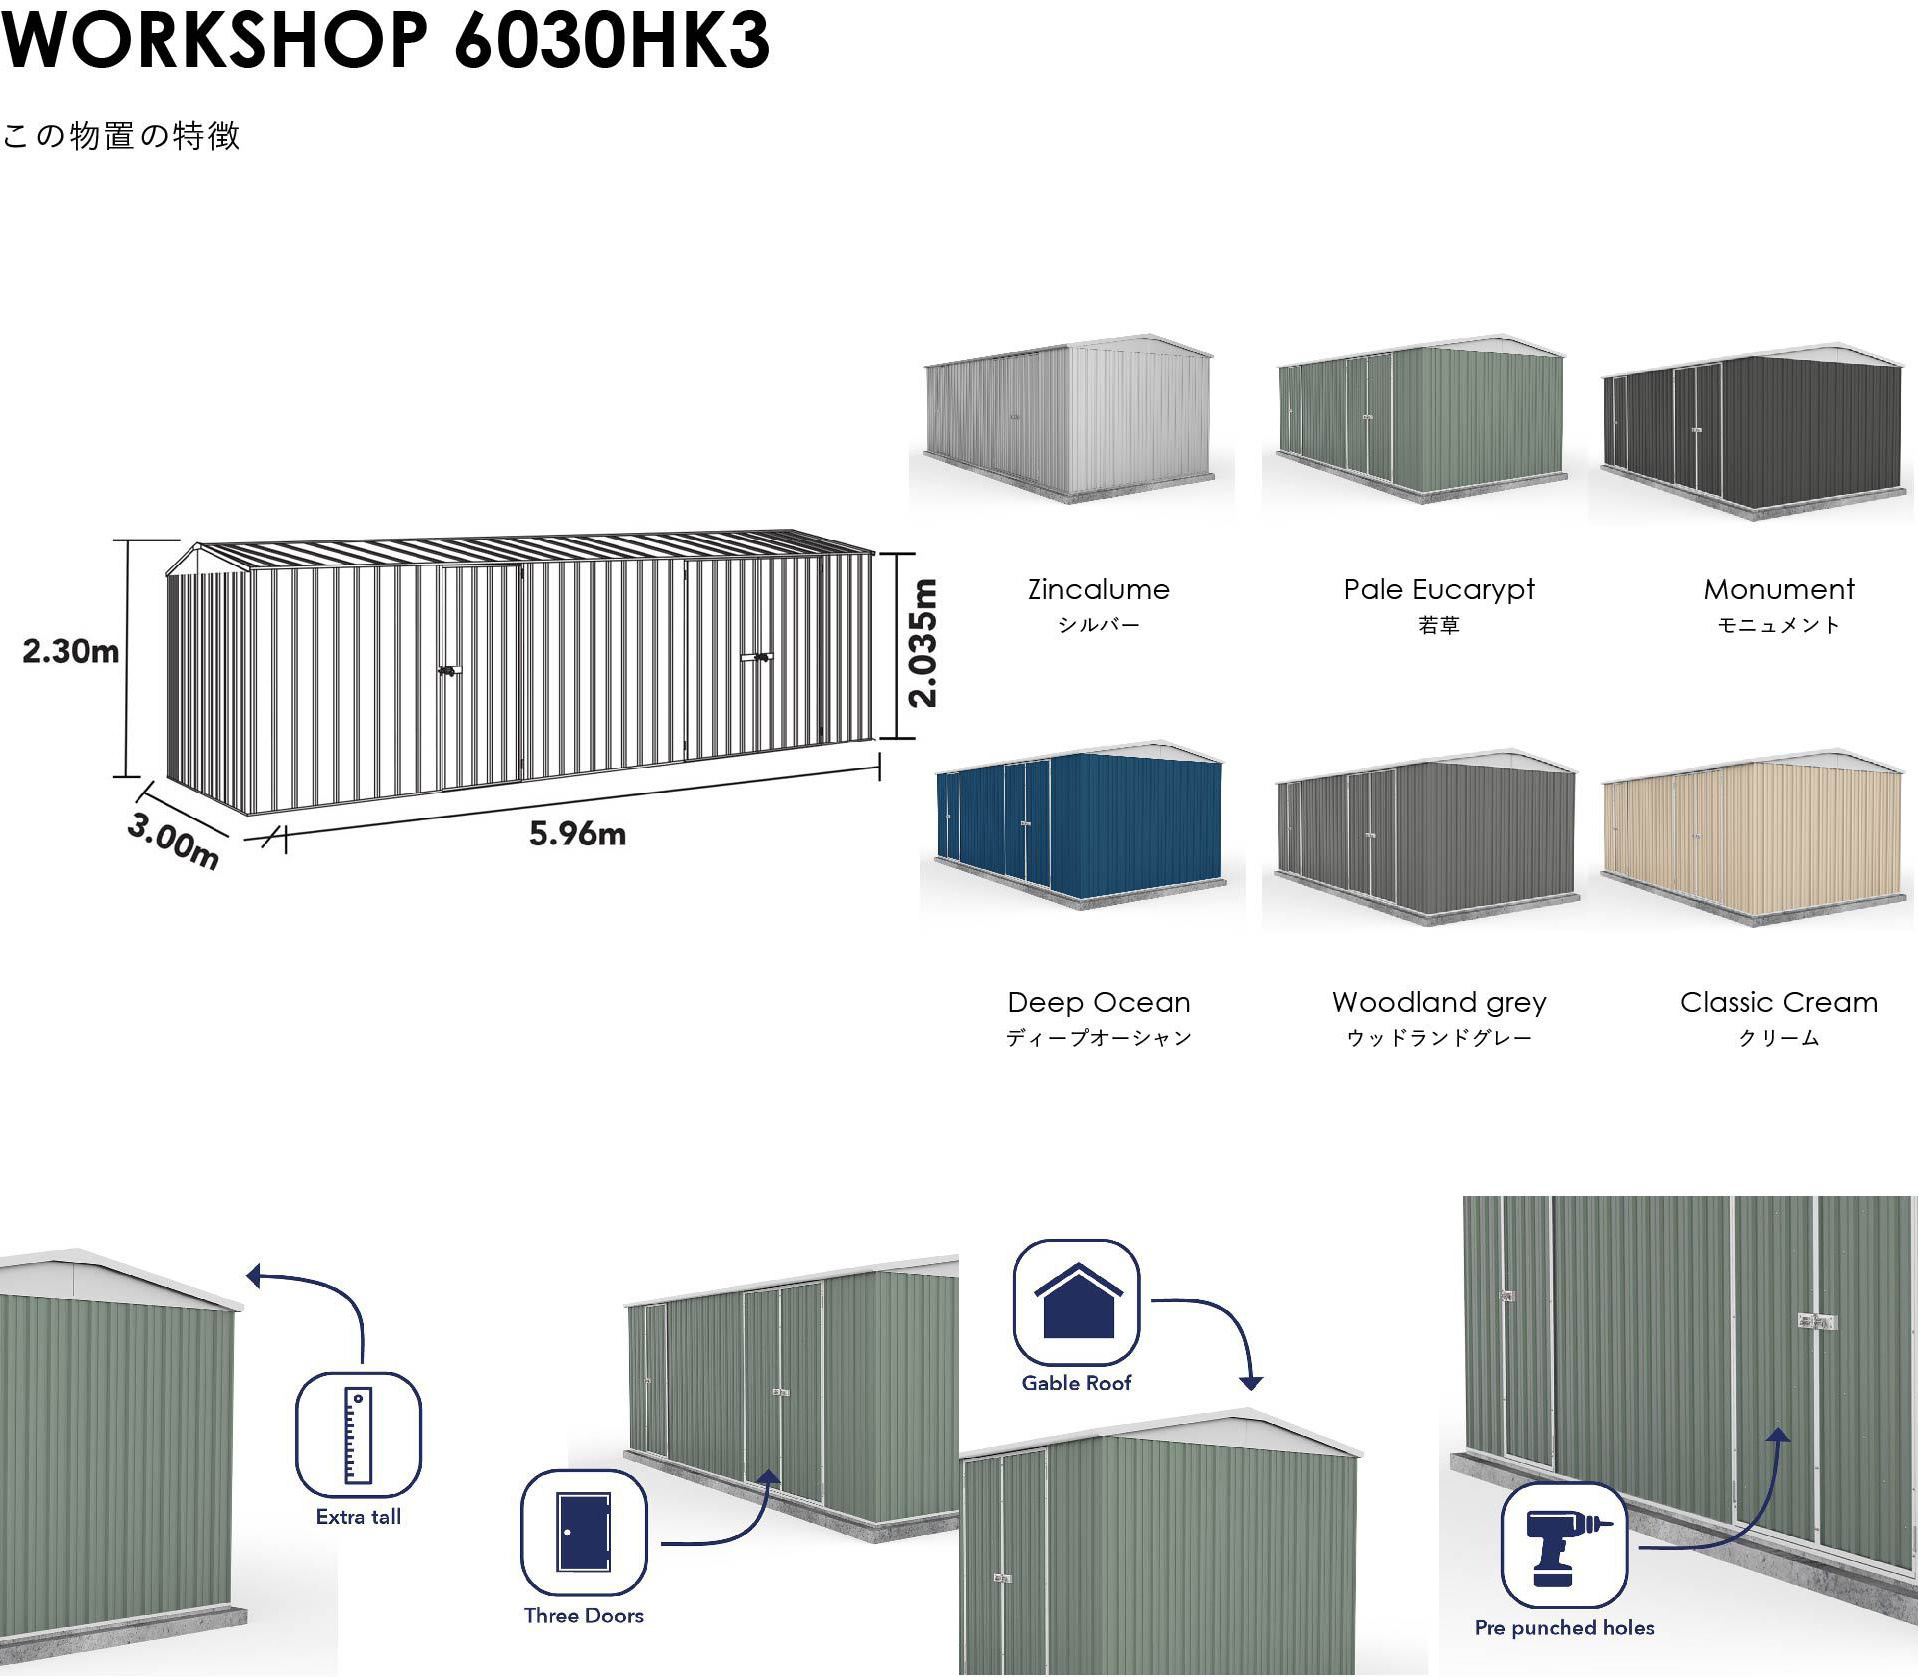 workshop 6030HK3